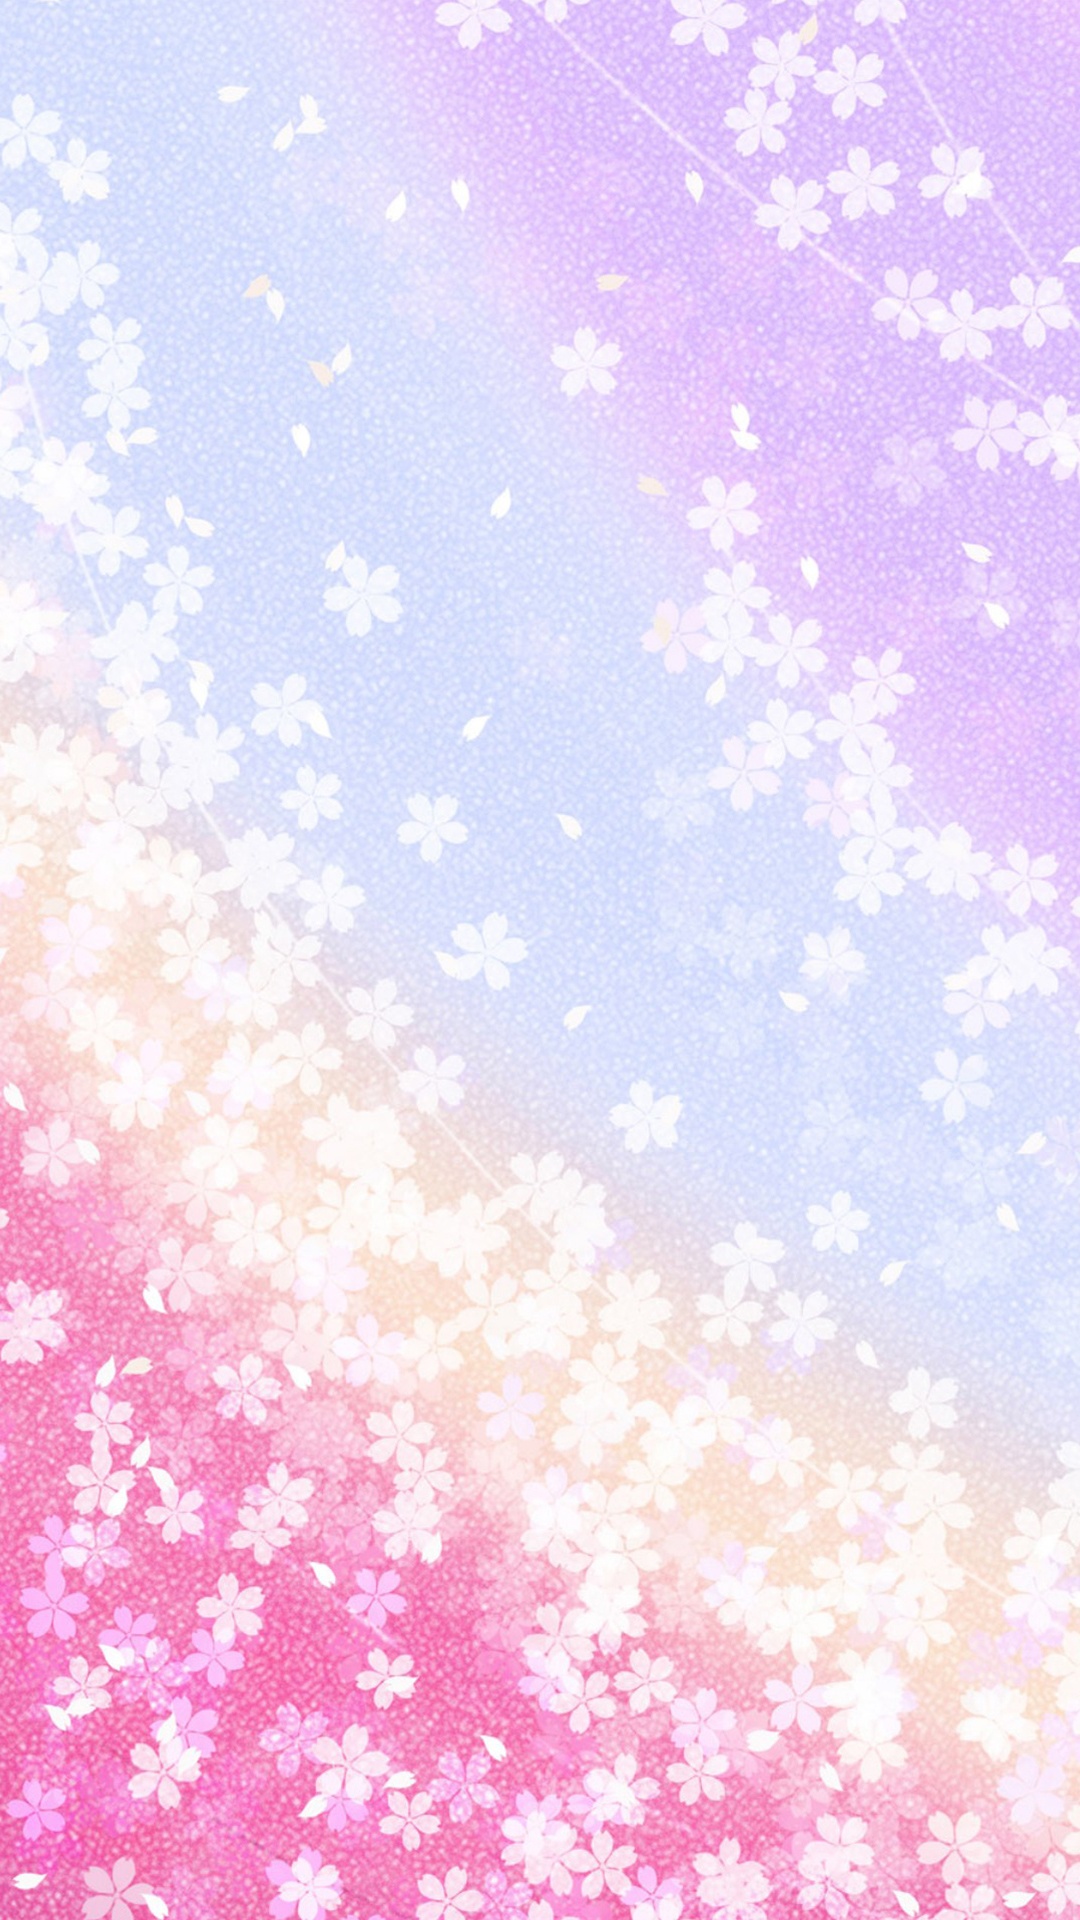 Japanese Style Glitter Cute Iphone Wallpaper Iphone Wallpaper